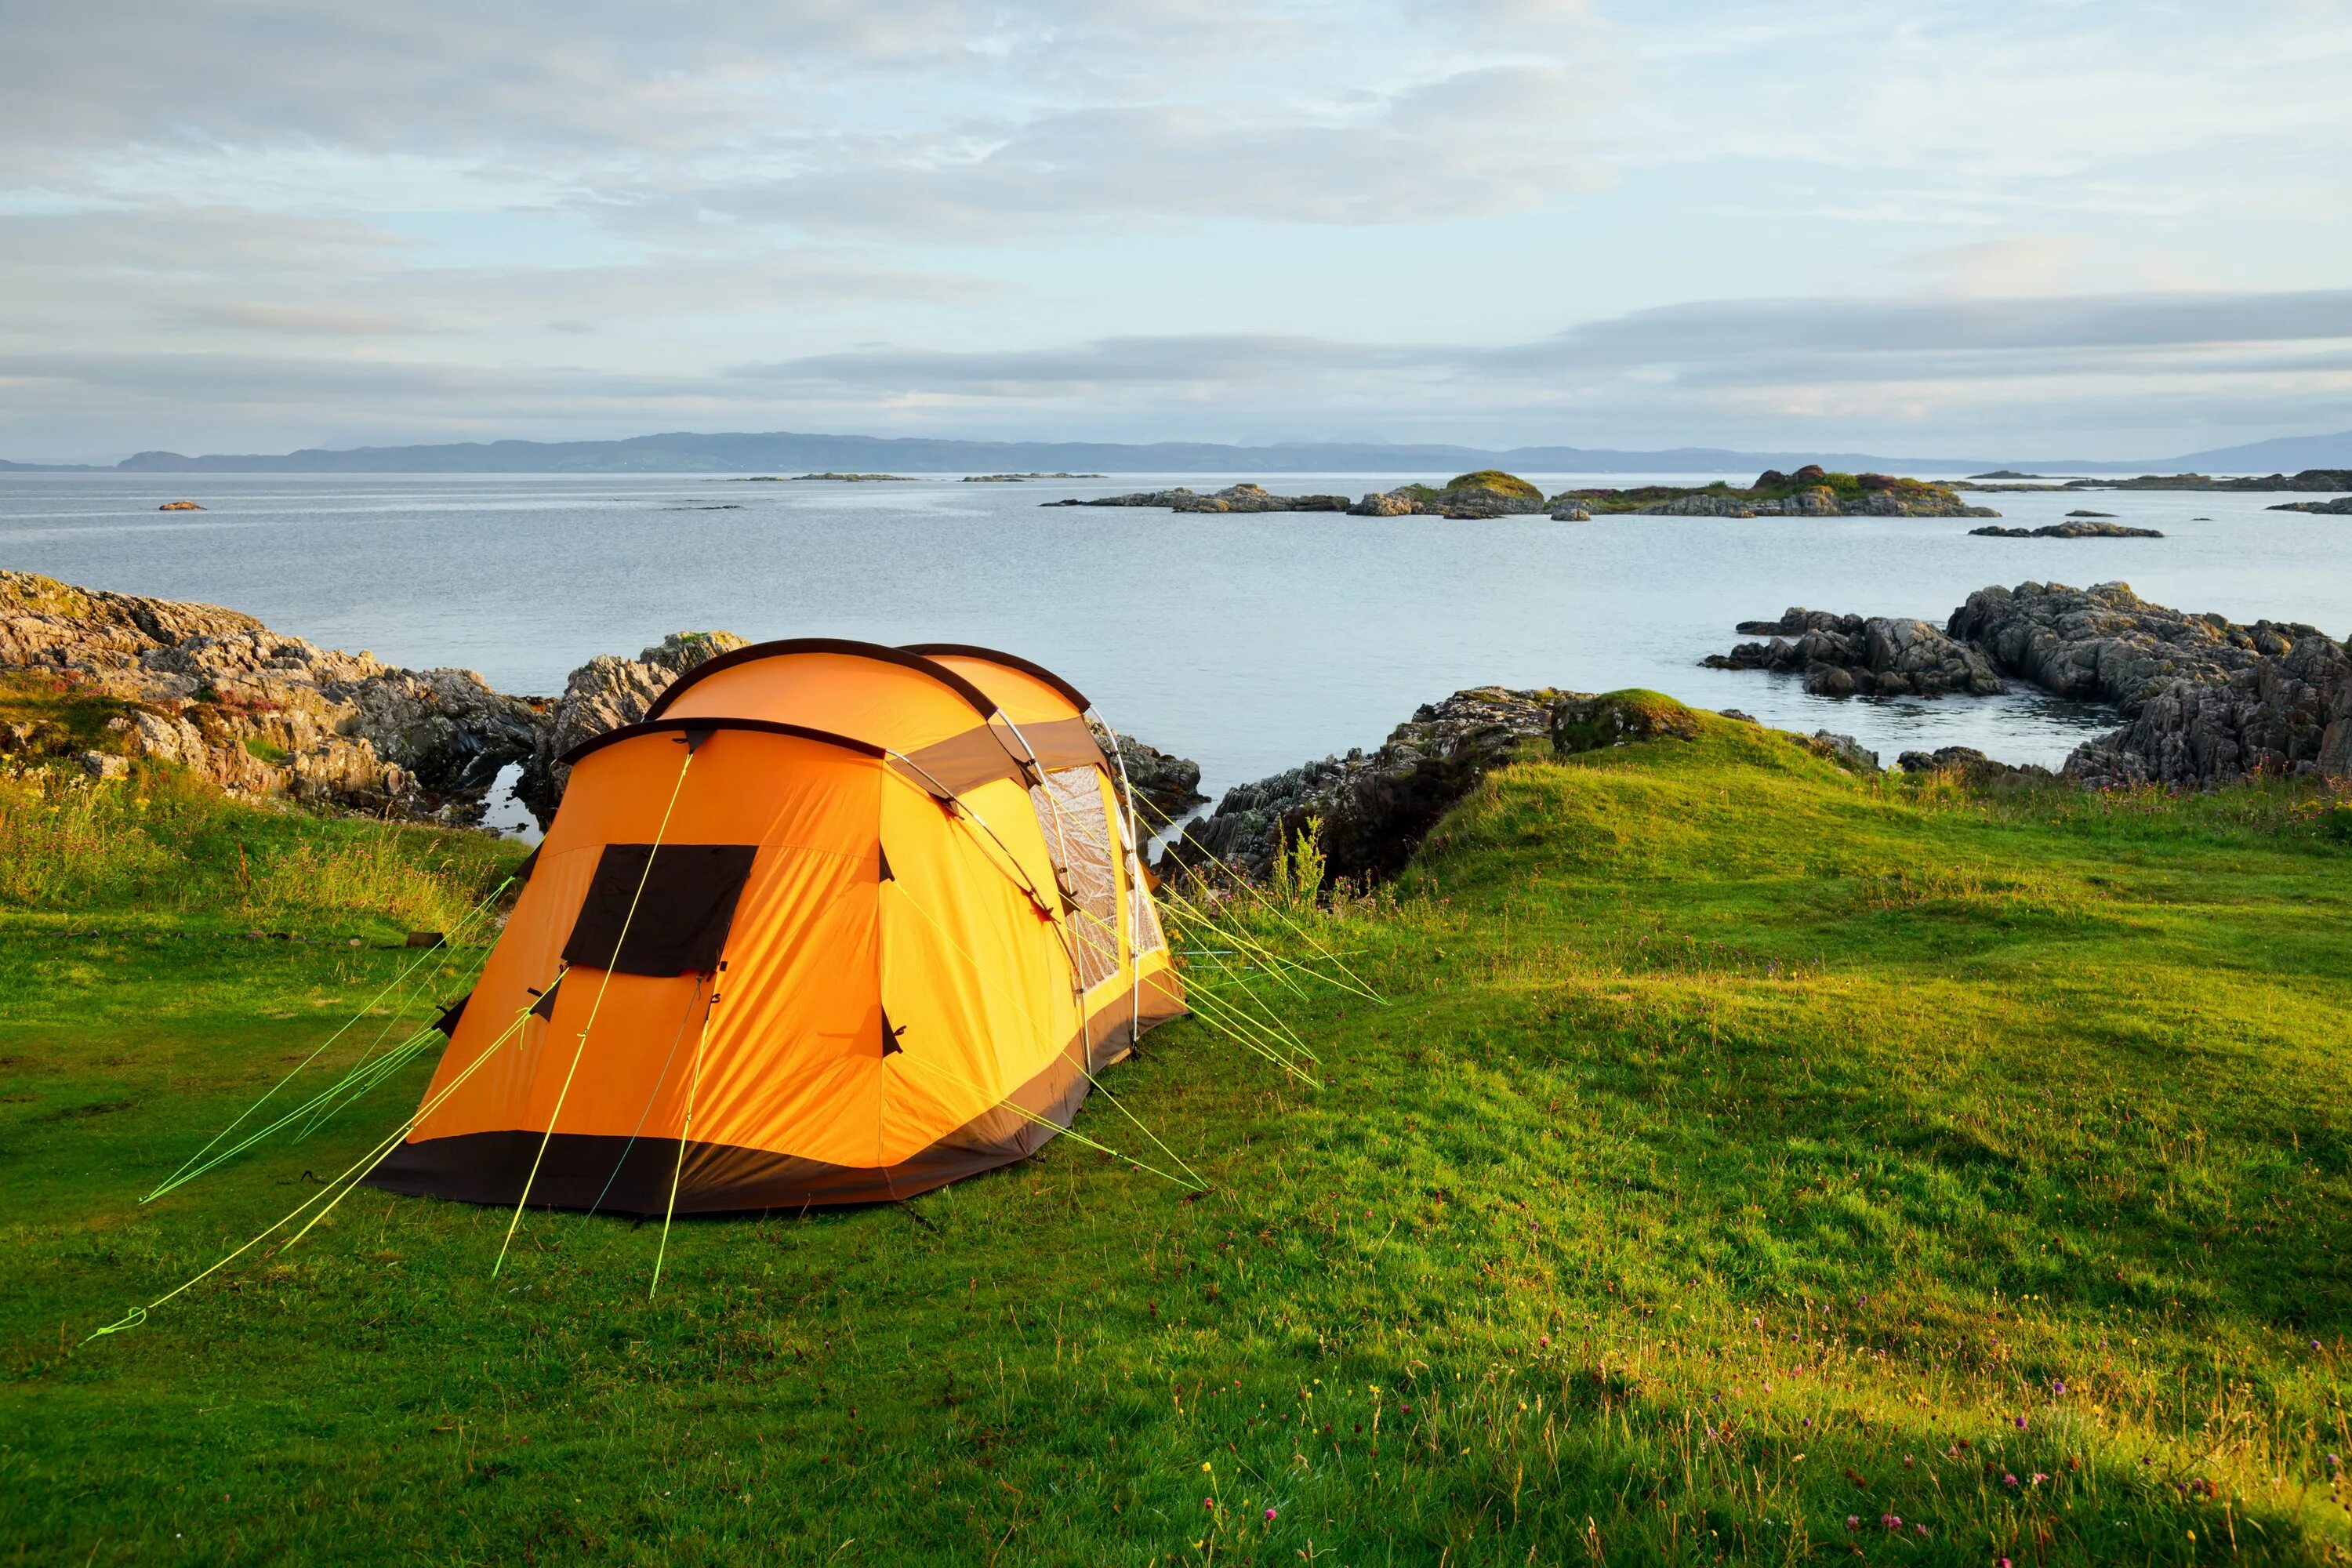 Camping pictures. Палатка на природе. Кемпинг. Палатки для кемпинга. Кемпинг на природе.